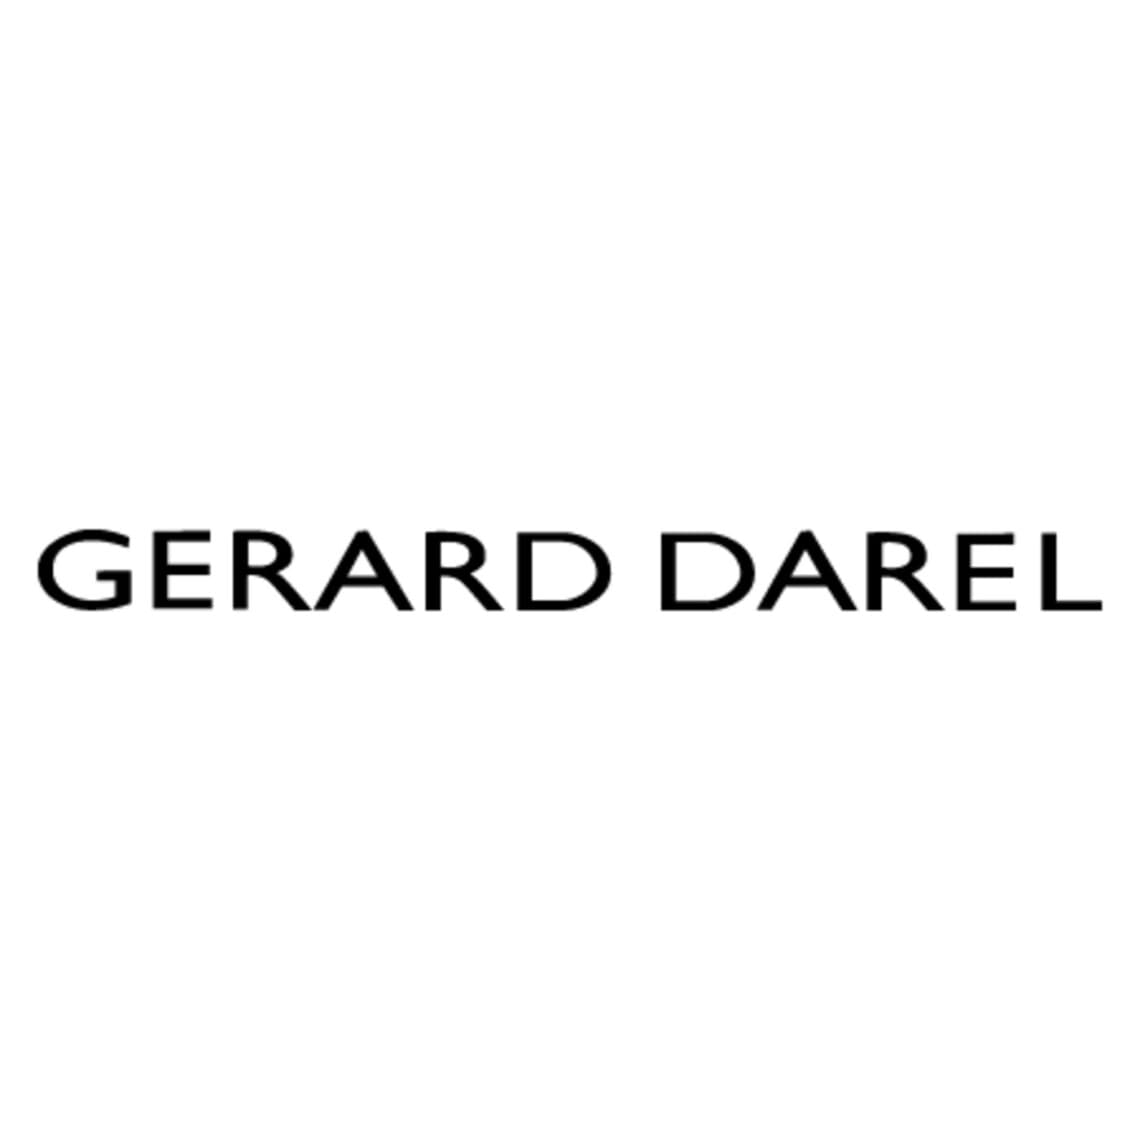 Gérard darel